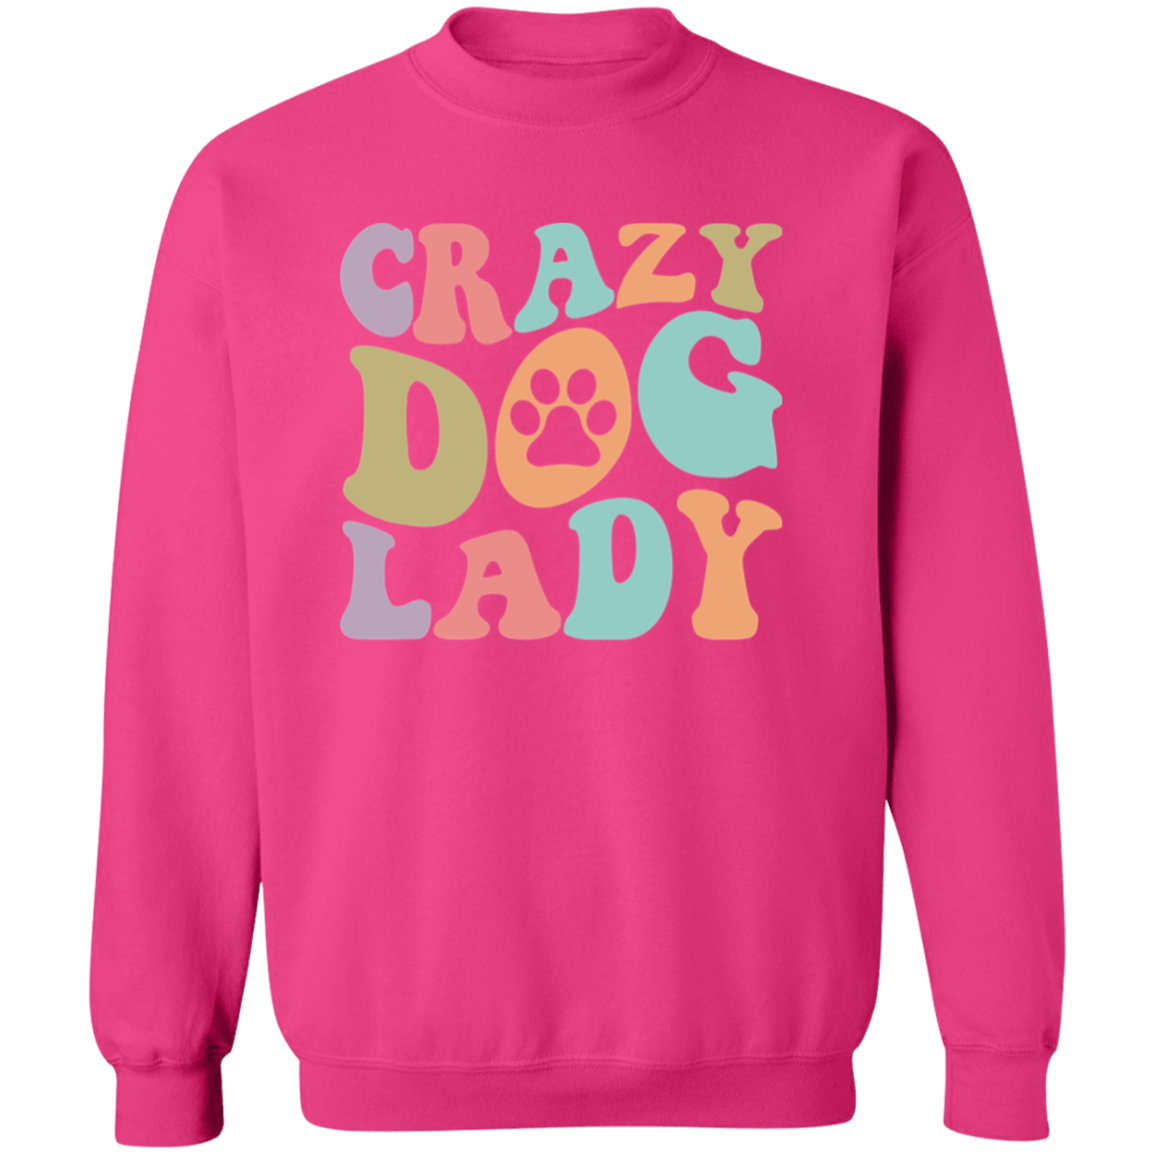 Crazy Dog Lady Paw Print Crewneck Pullover Sweatshirt